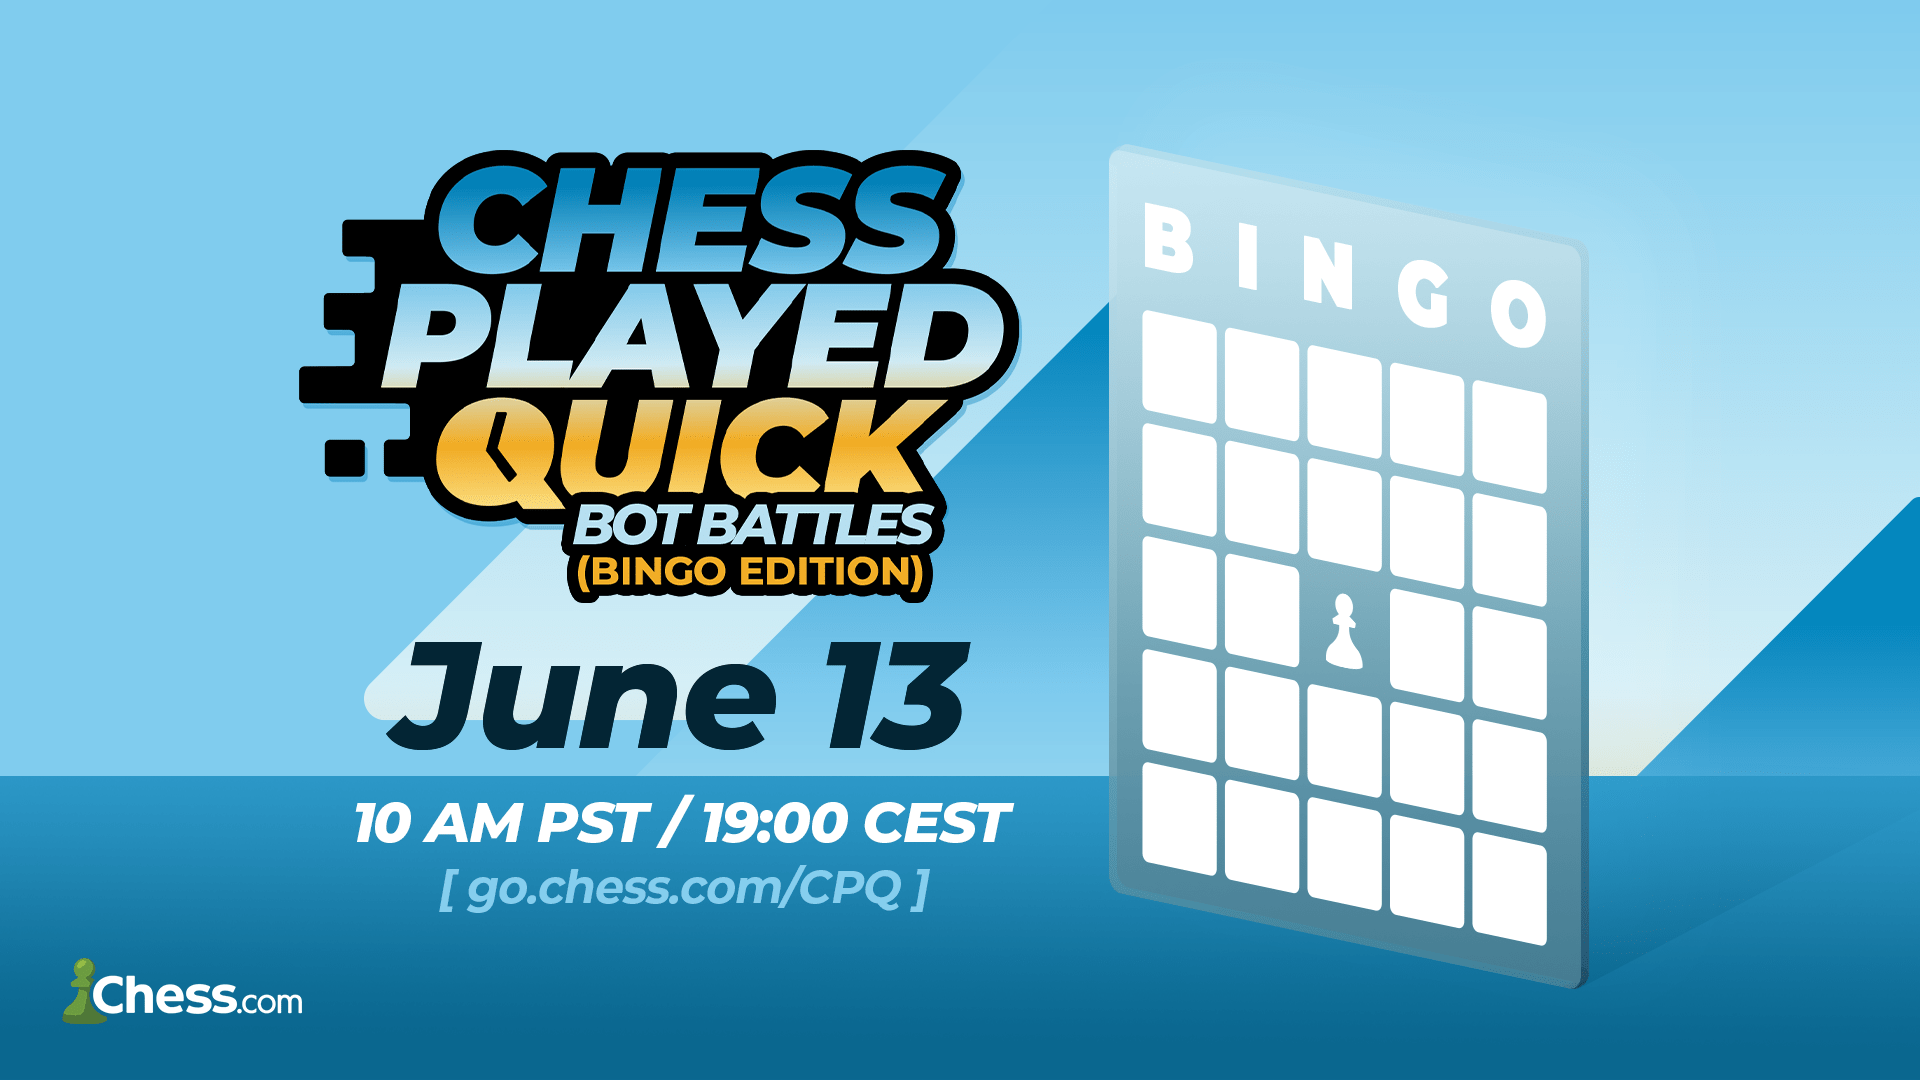 Announcing Chess Played Quick Bot Battles Bingo Edition